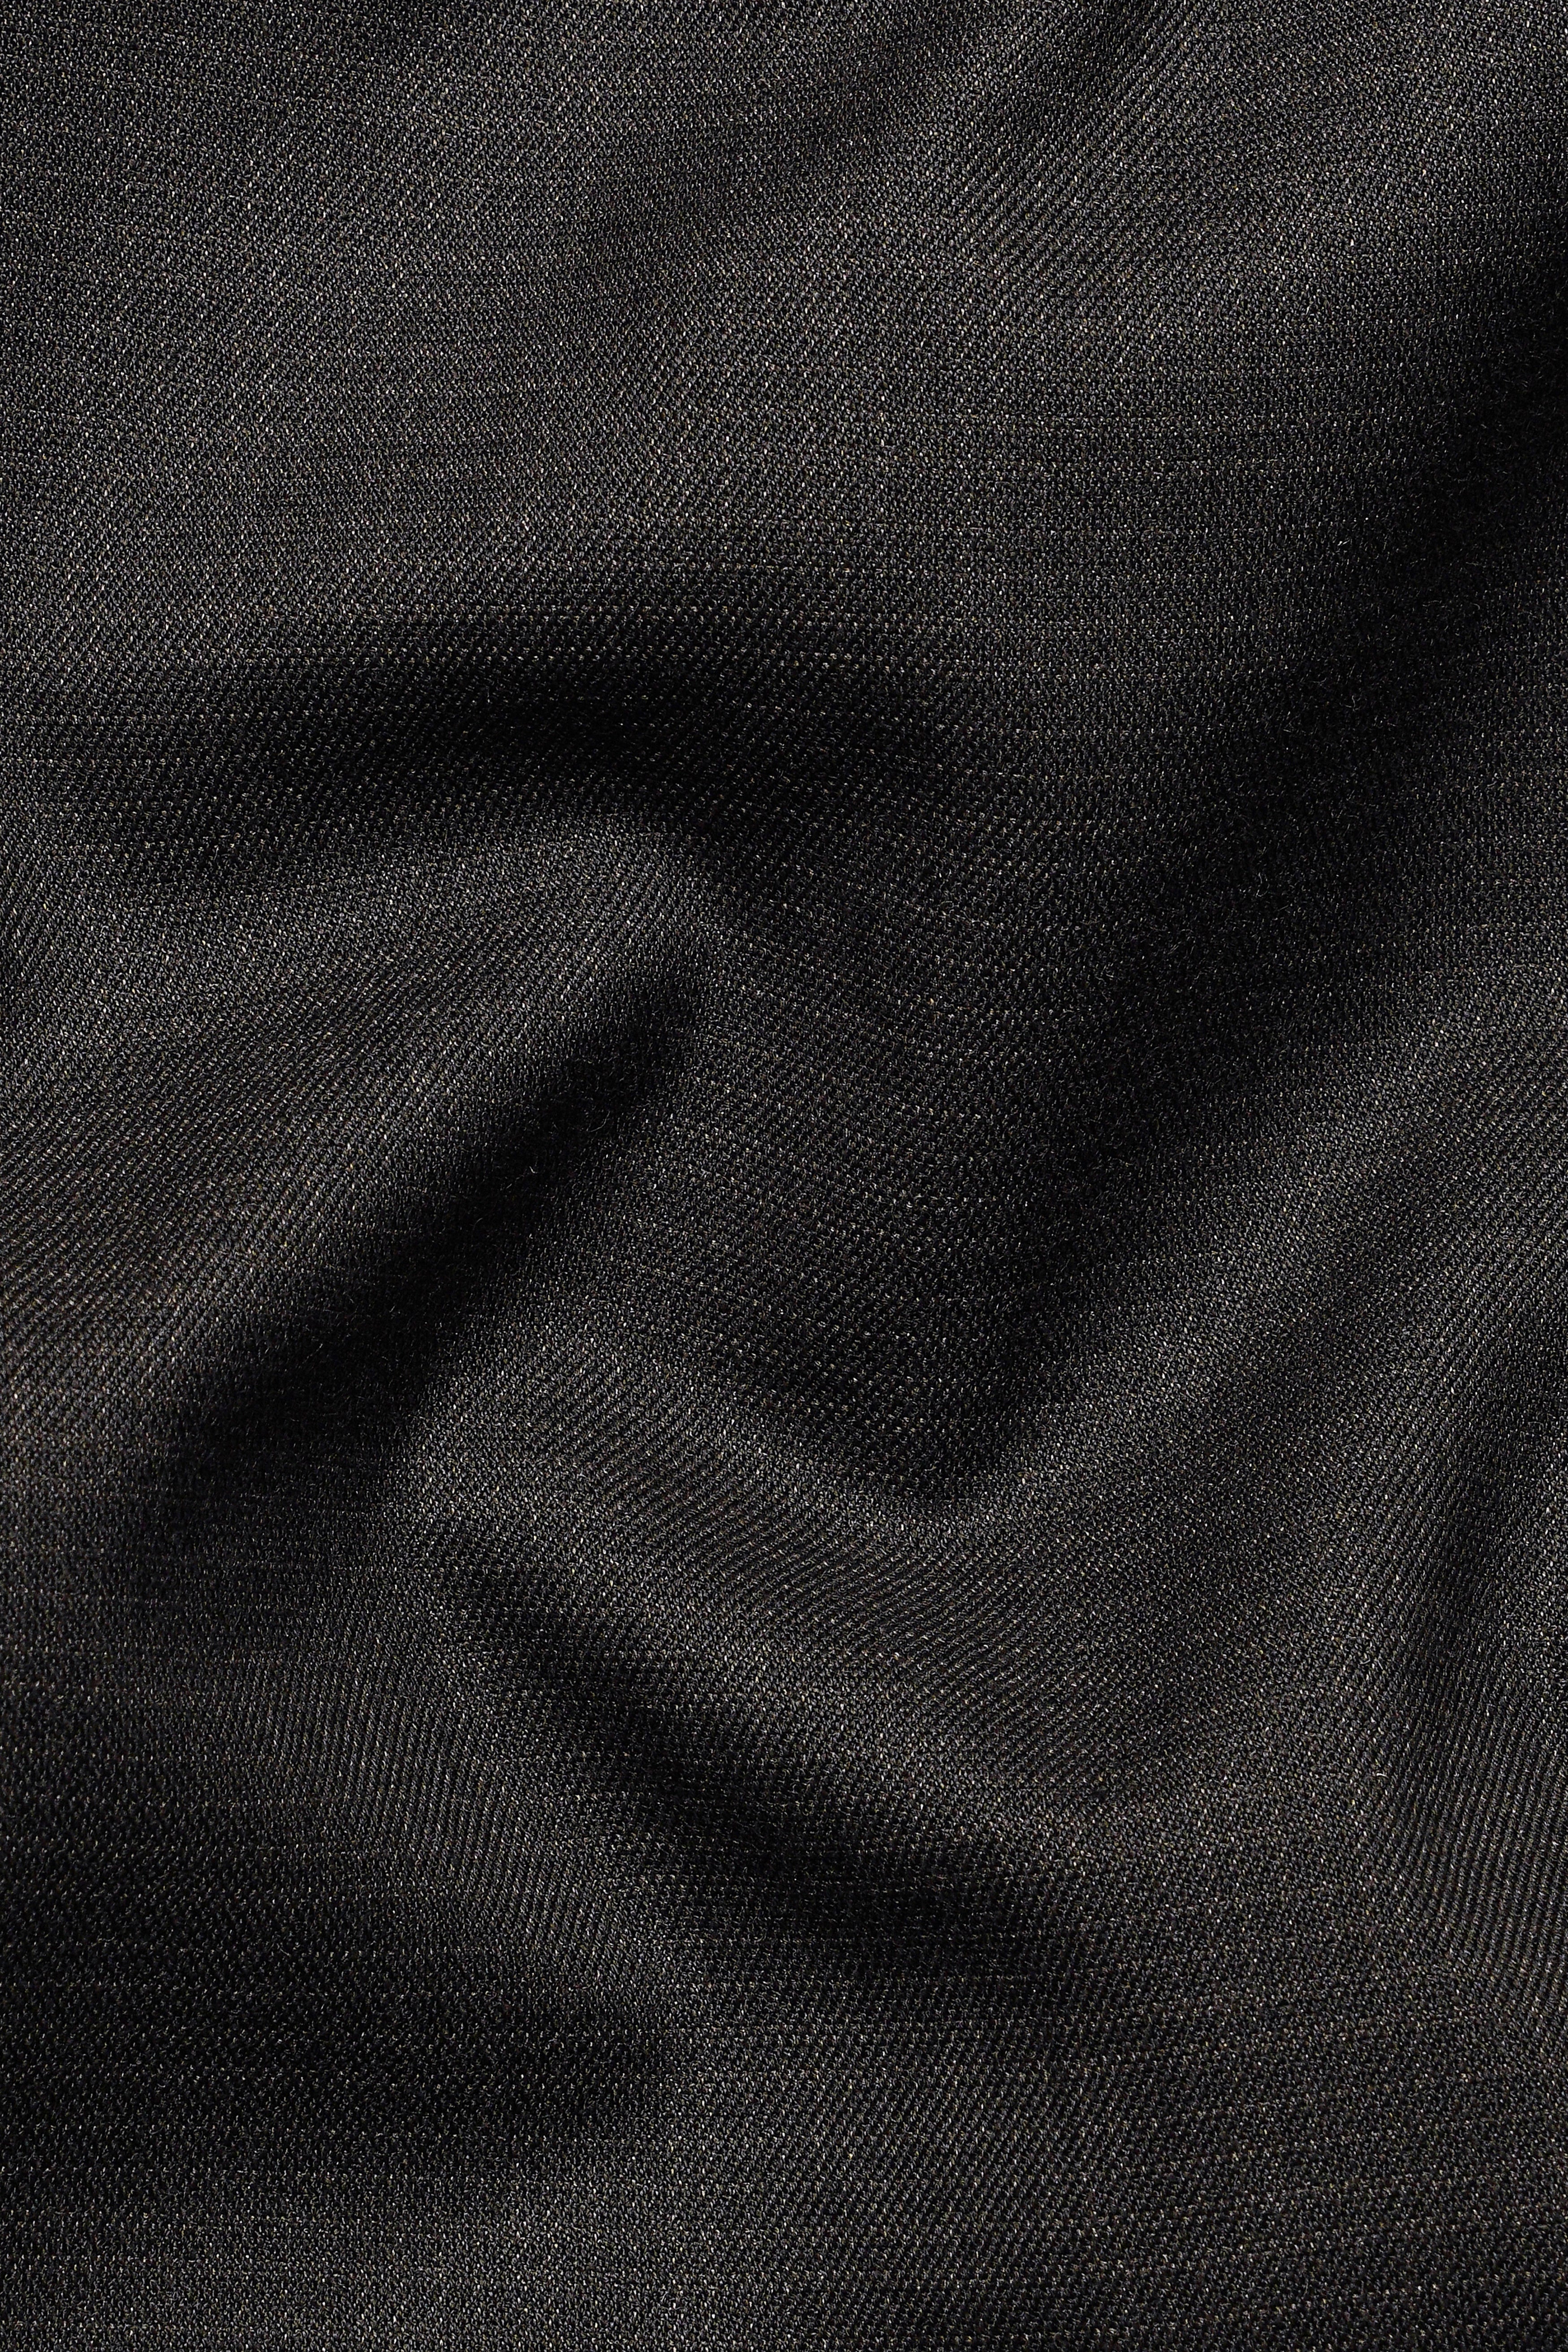 Zeus Black Subtle Checkered Wool Rich Cross Buttoned Bandhgala Suit